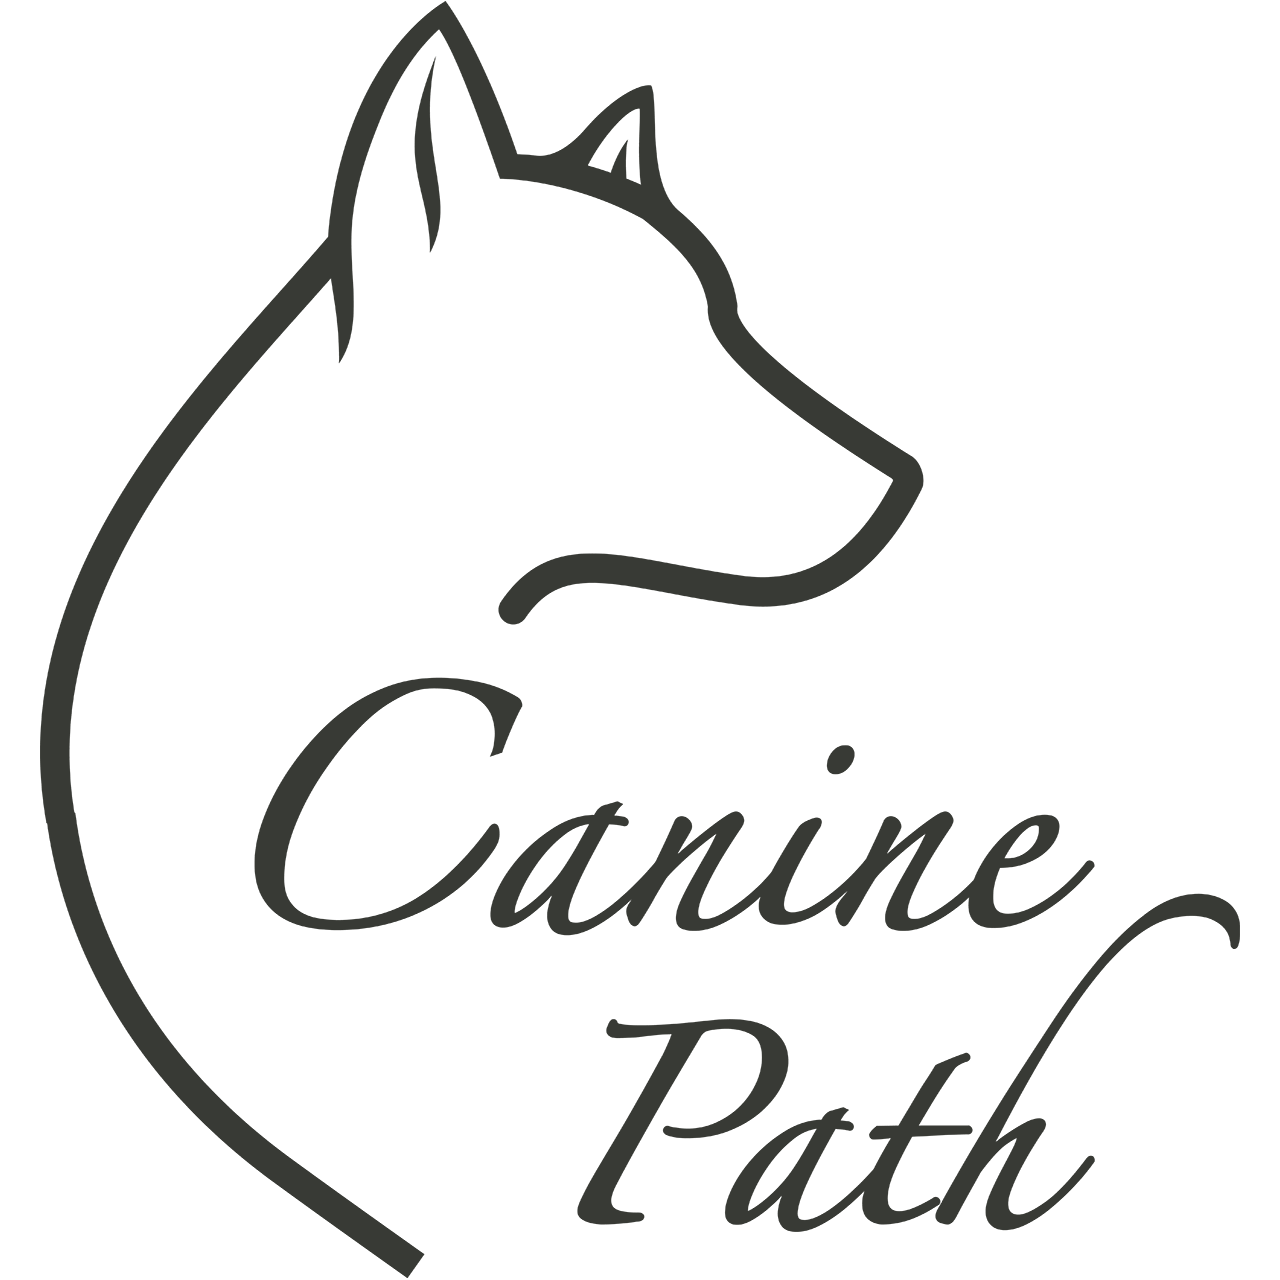 Canine Path - Los Angeles Pet Training